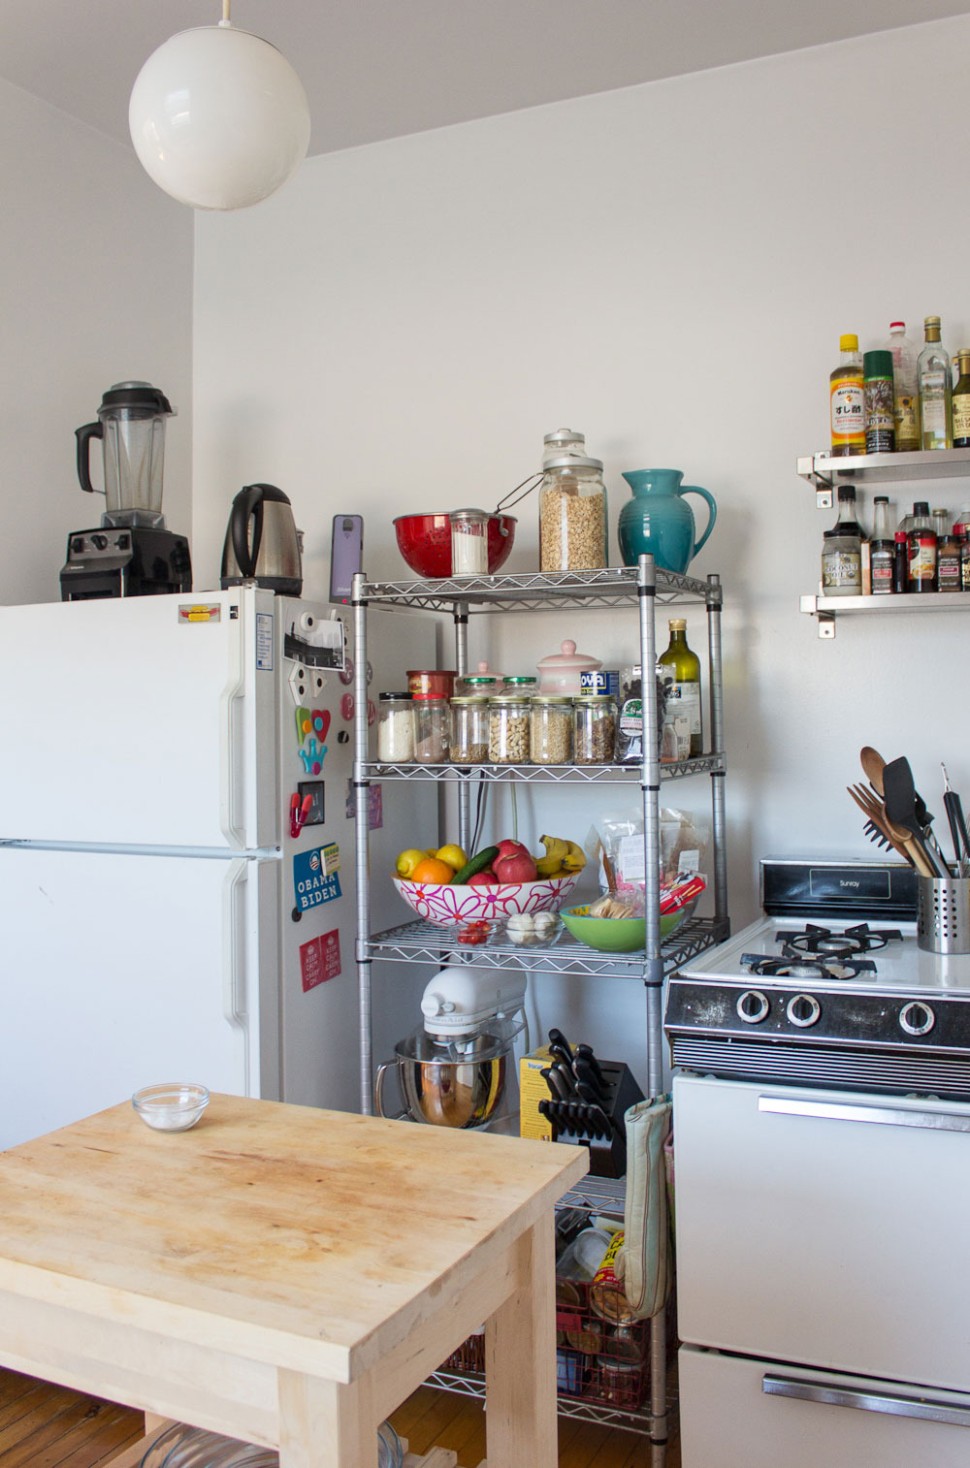 7+ Best Small Kitchen Design Ideas - Decorating Tiny Apartment